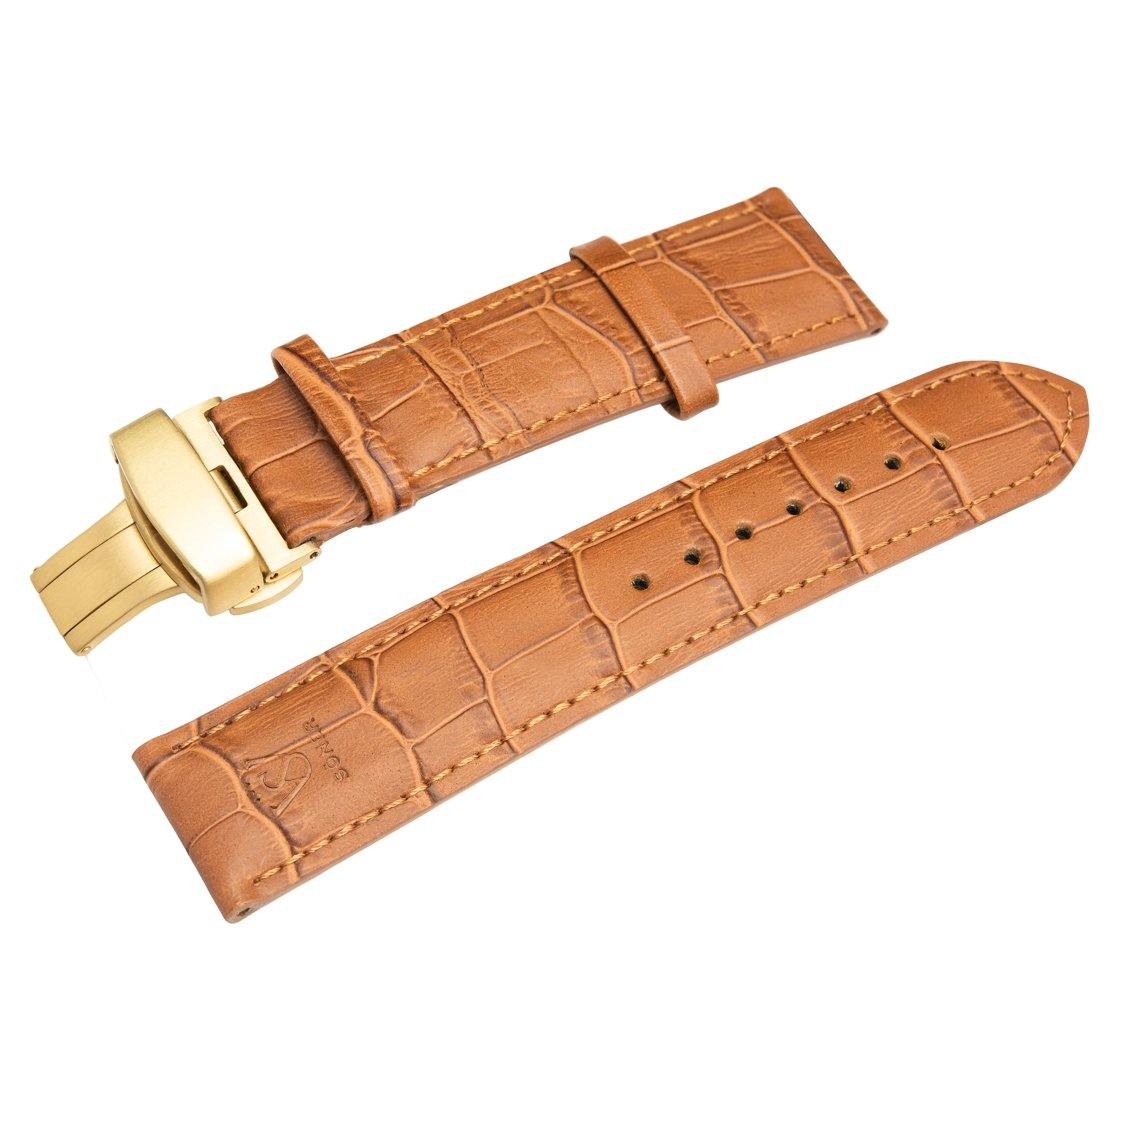 SÖNER HERITAGE B - Alligator strap in light brown leather SÖNER Watch straps.